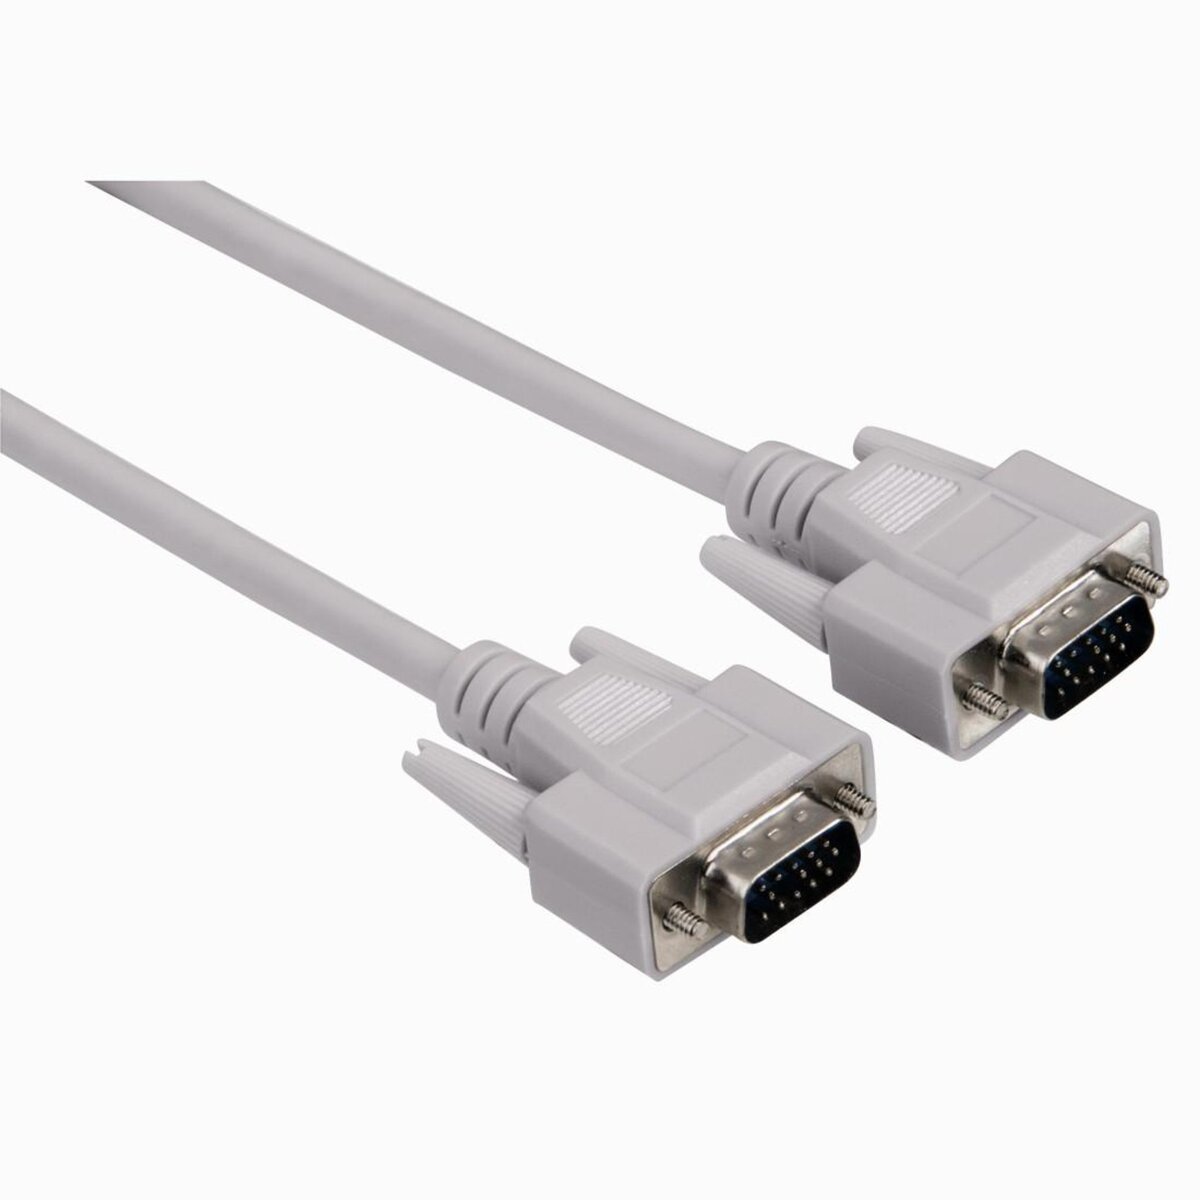 QILIVE Connectique Cable MON VGA HDD 1.8 Metres